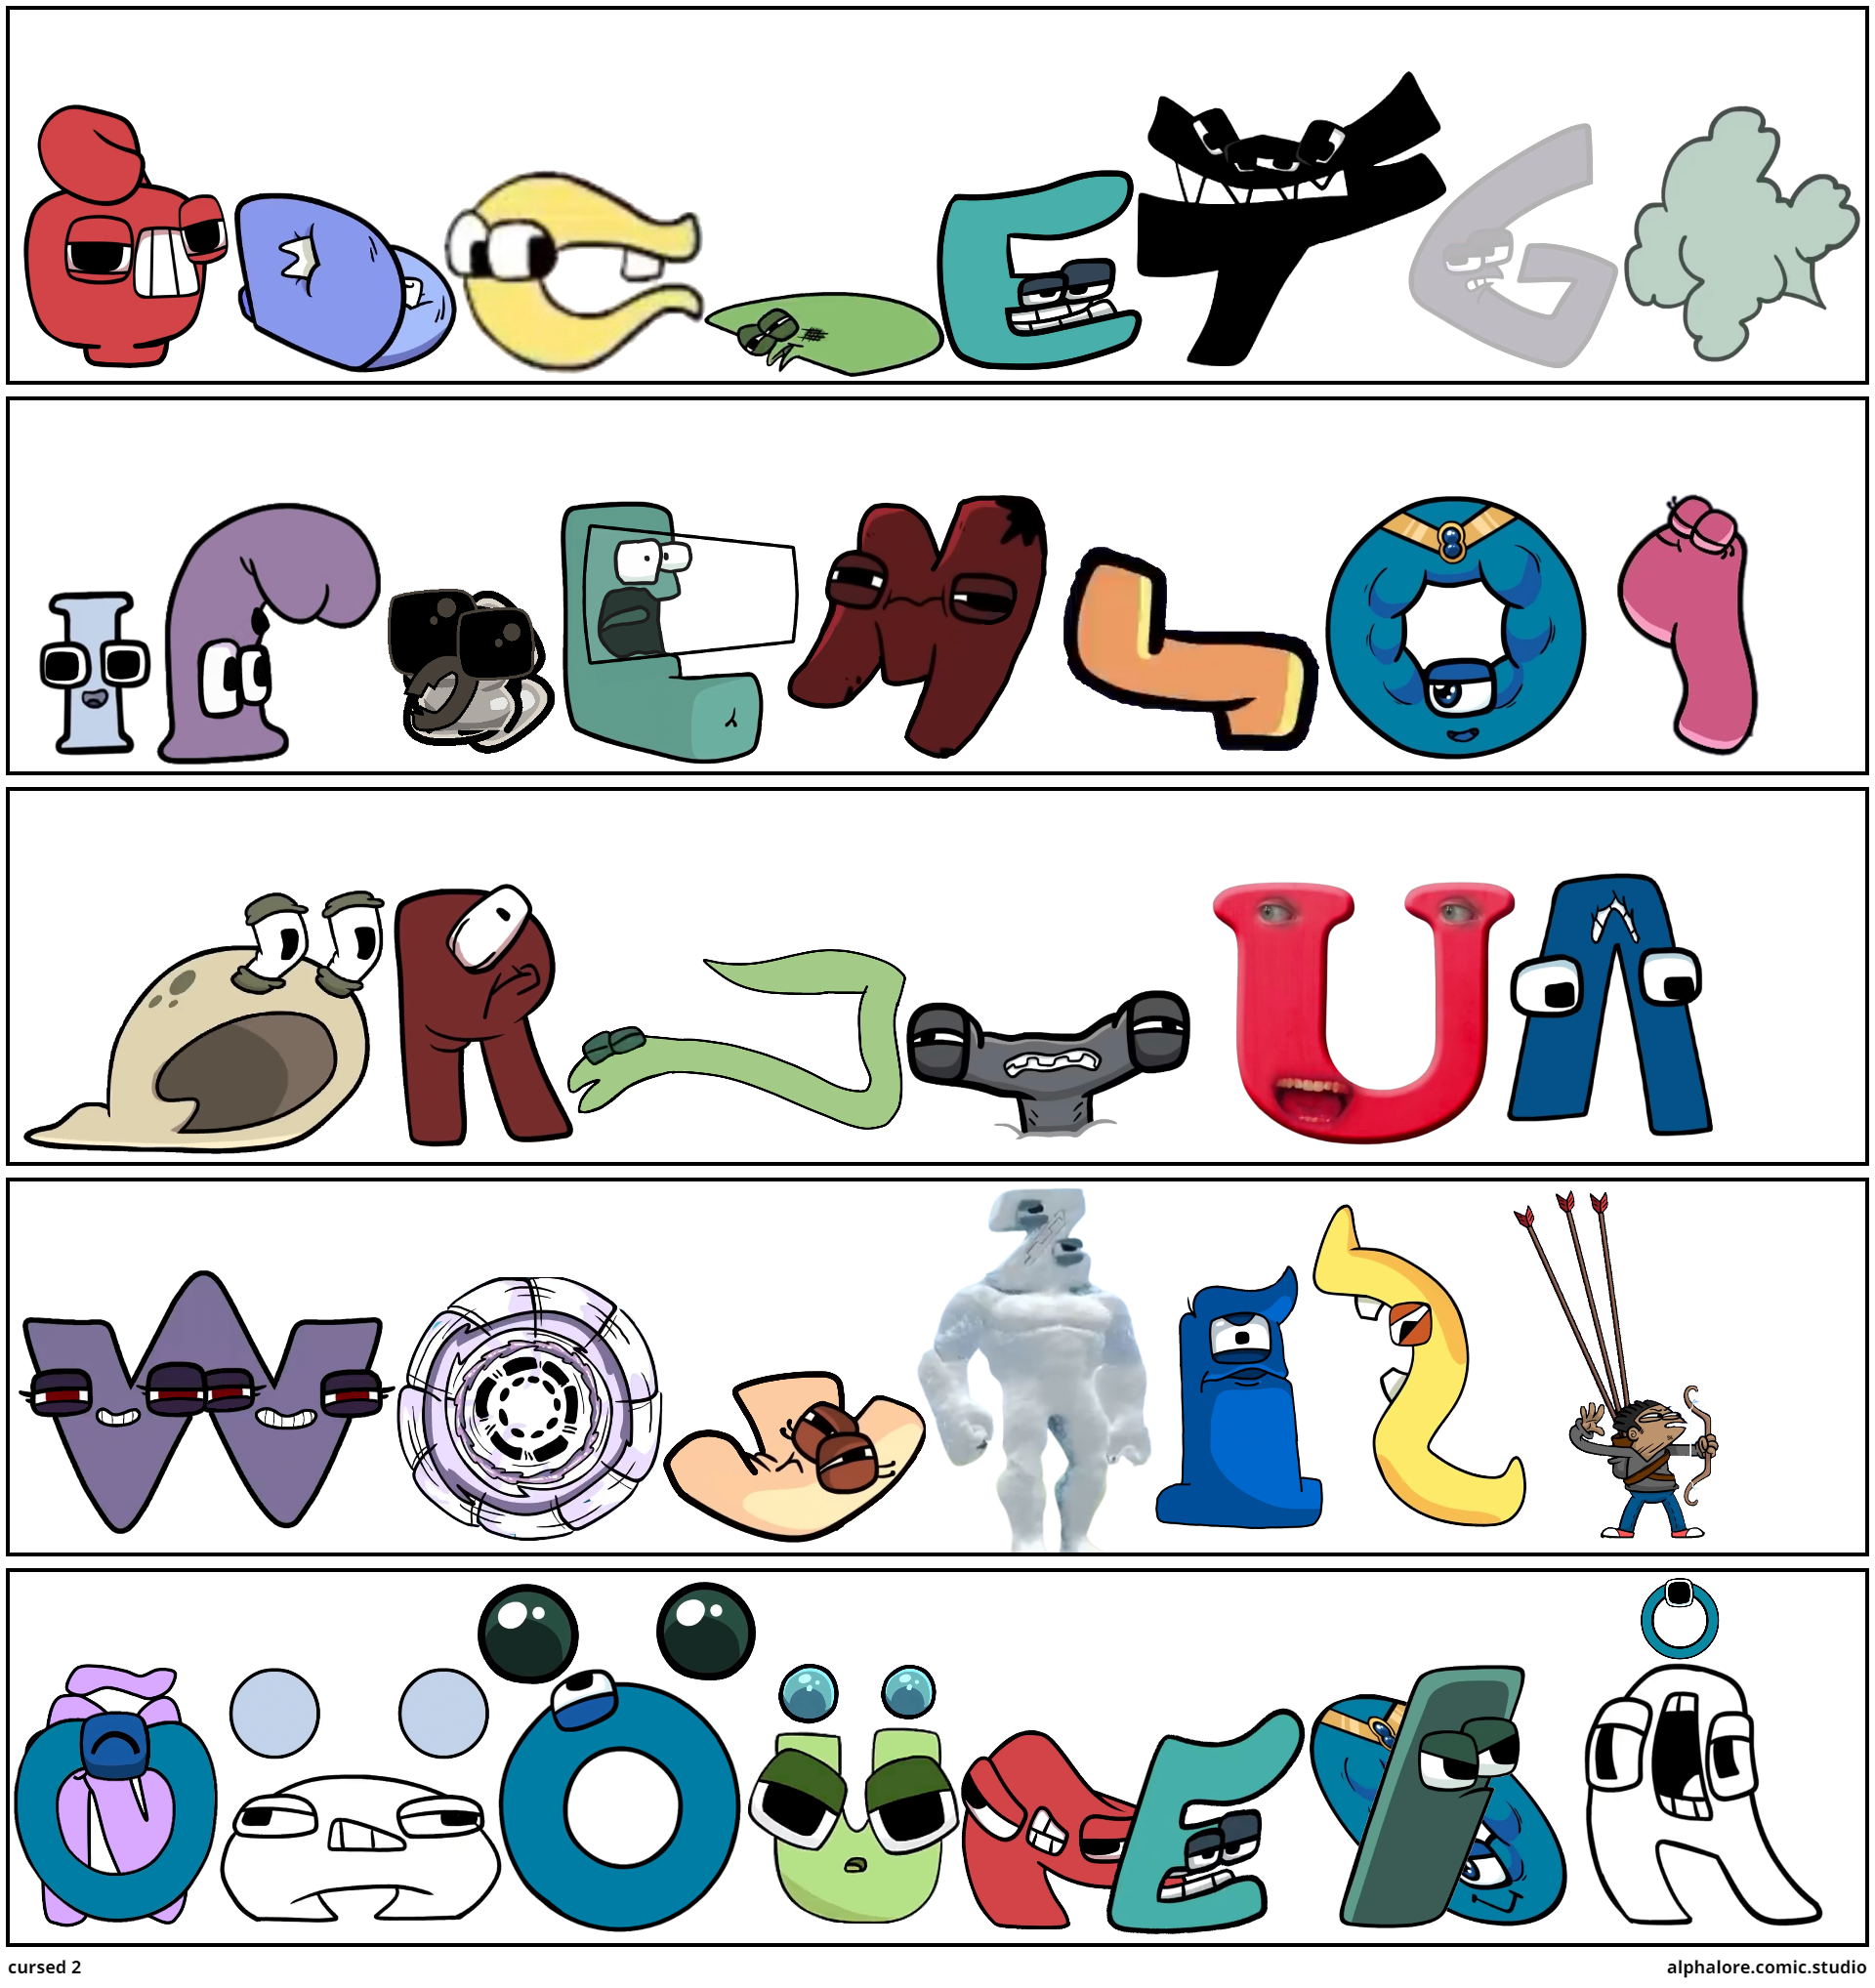 Meeting alphabet lore - Comic Studio